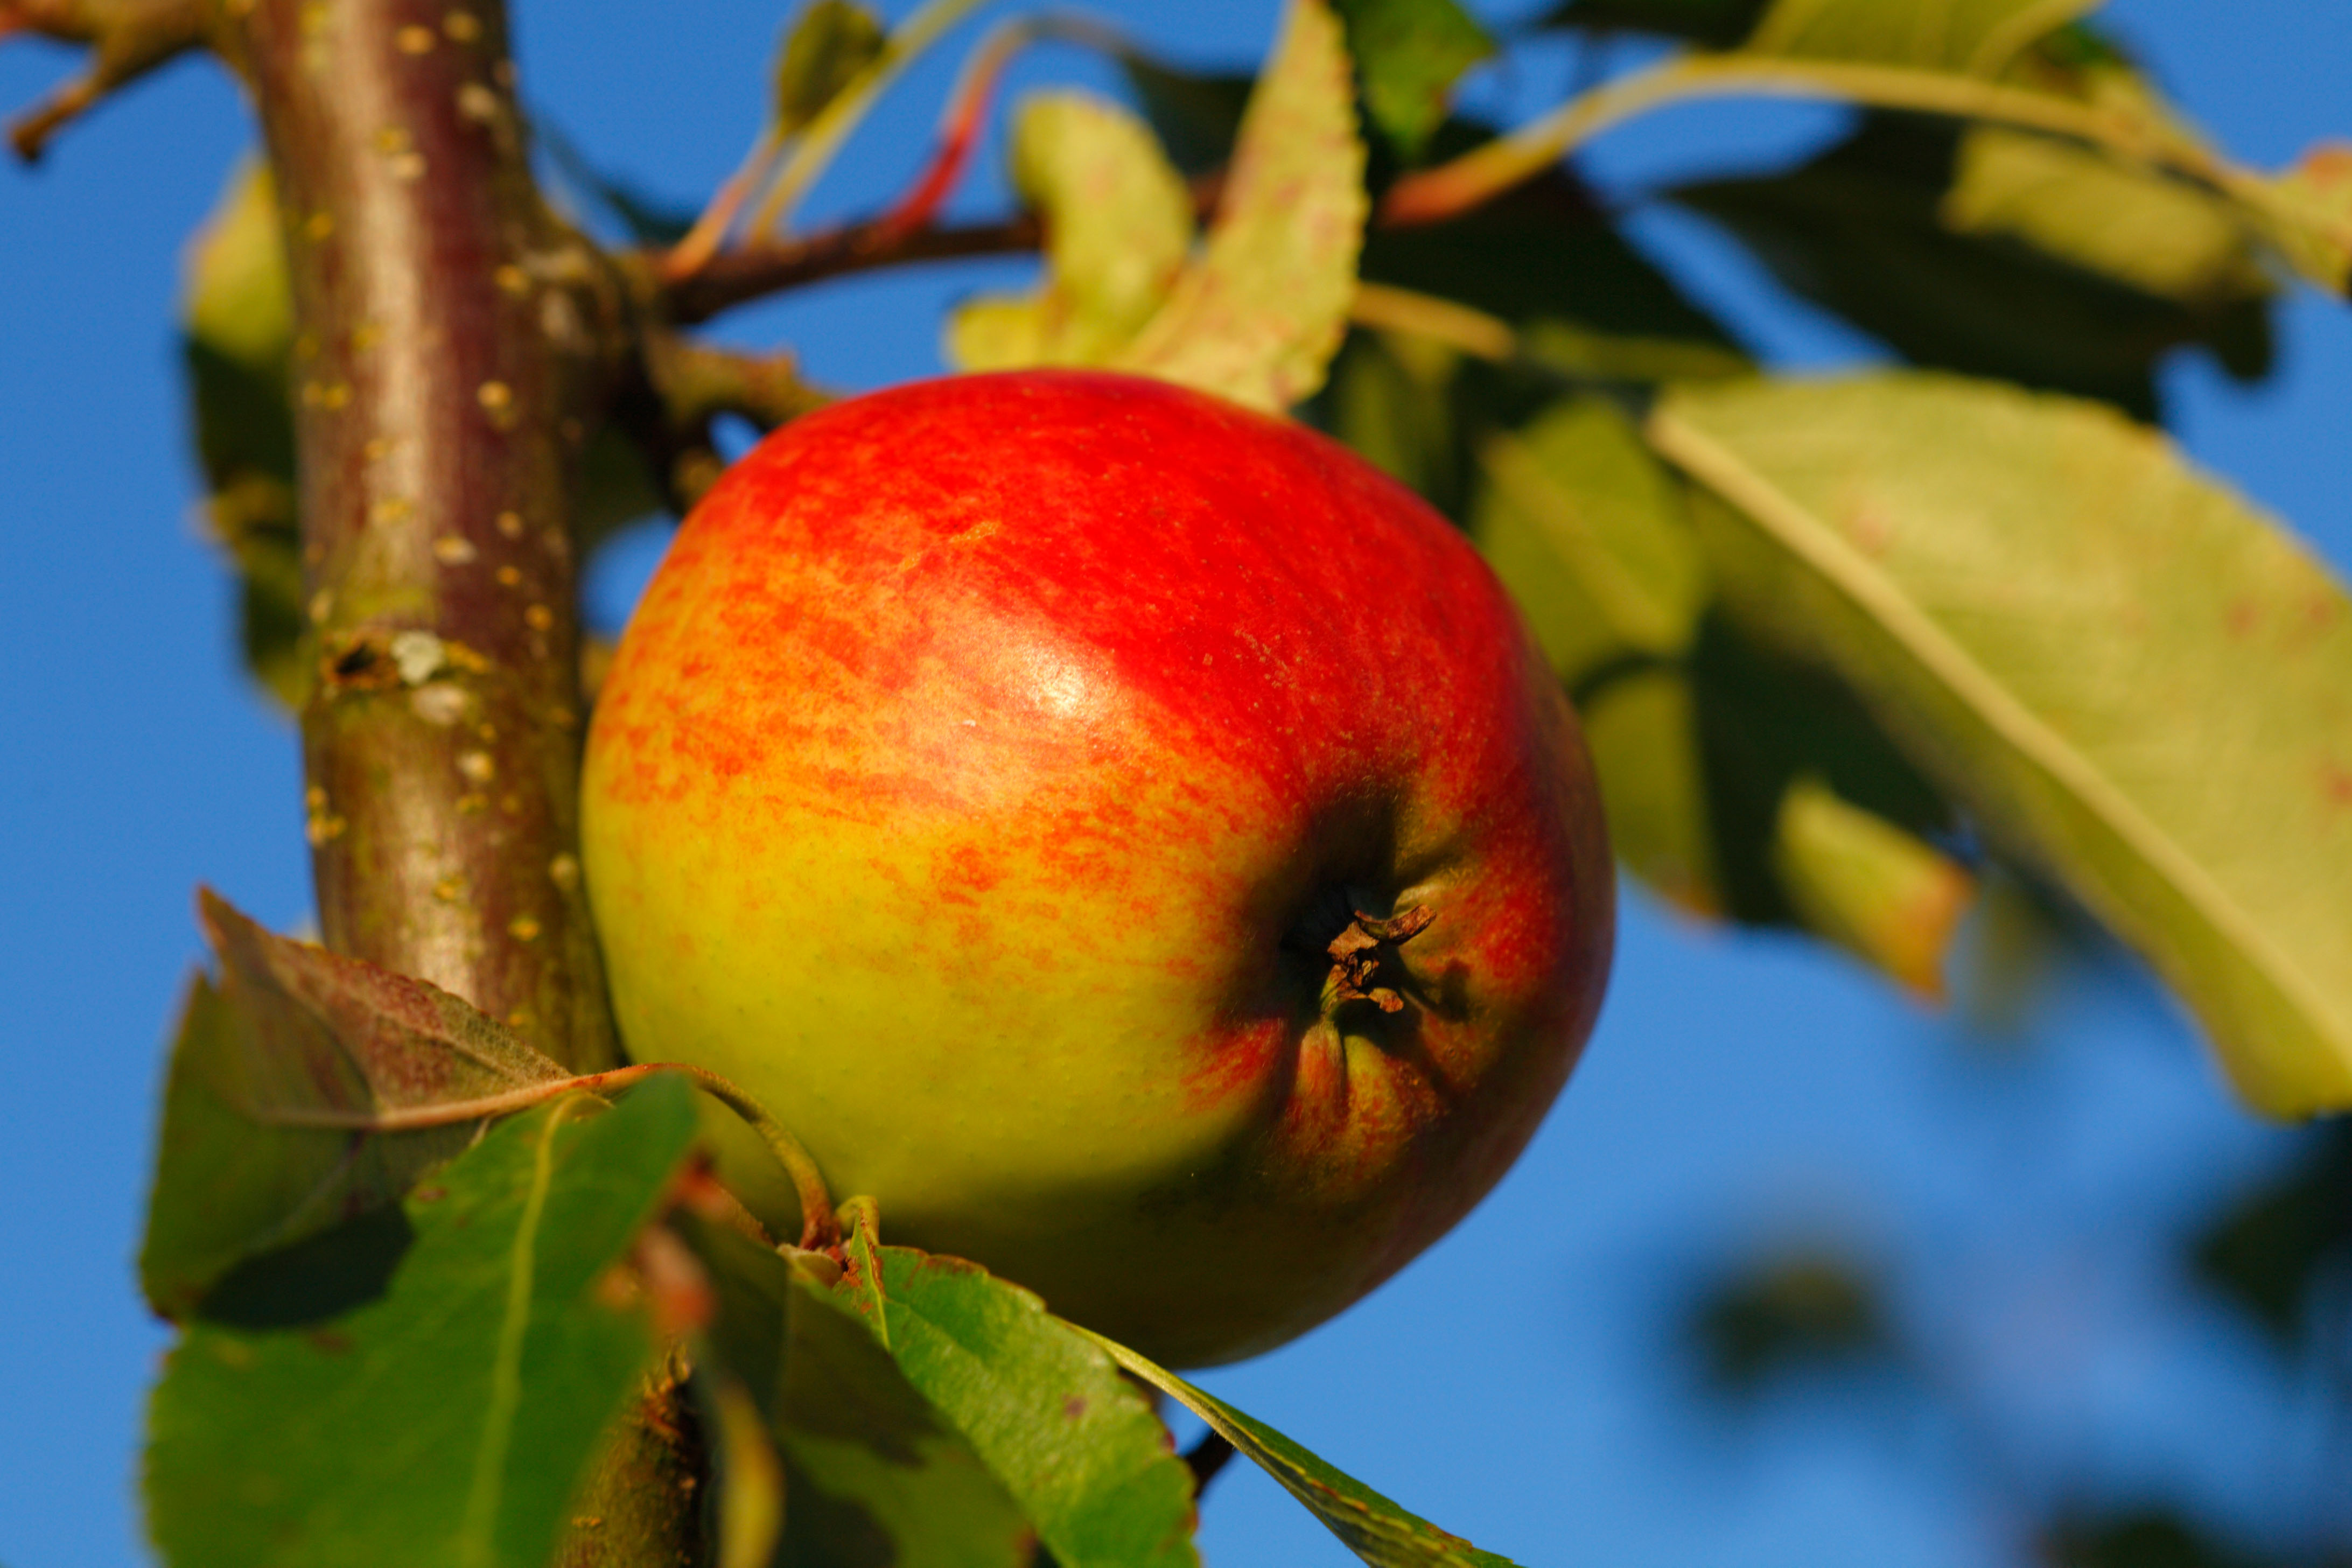 'Red Falstaff' apple (Alamy/PA)